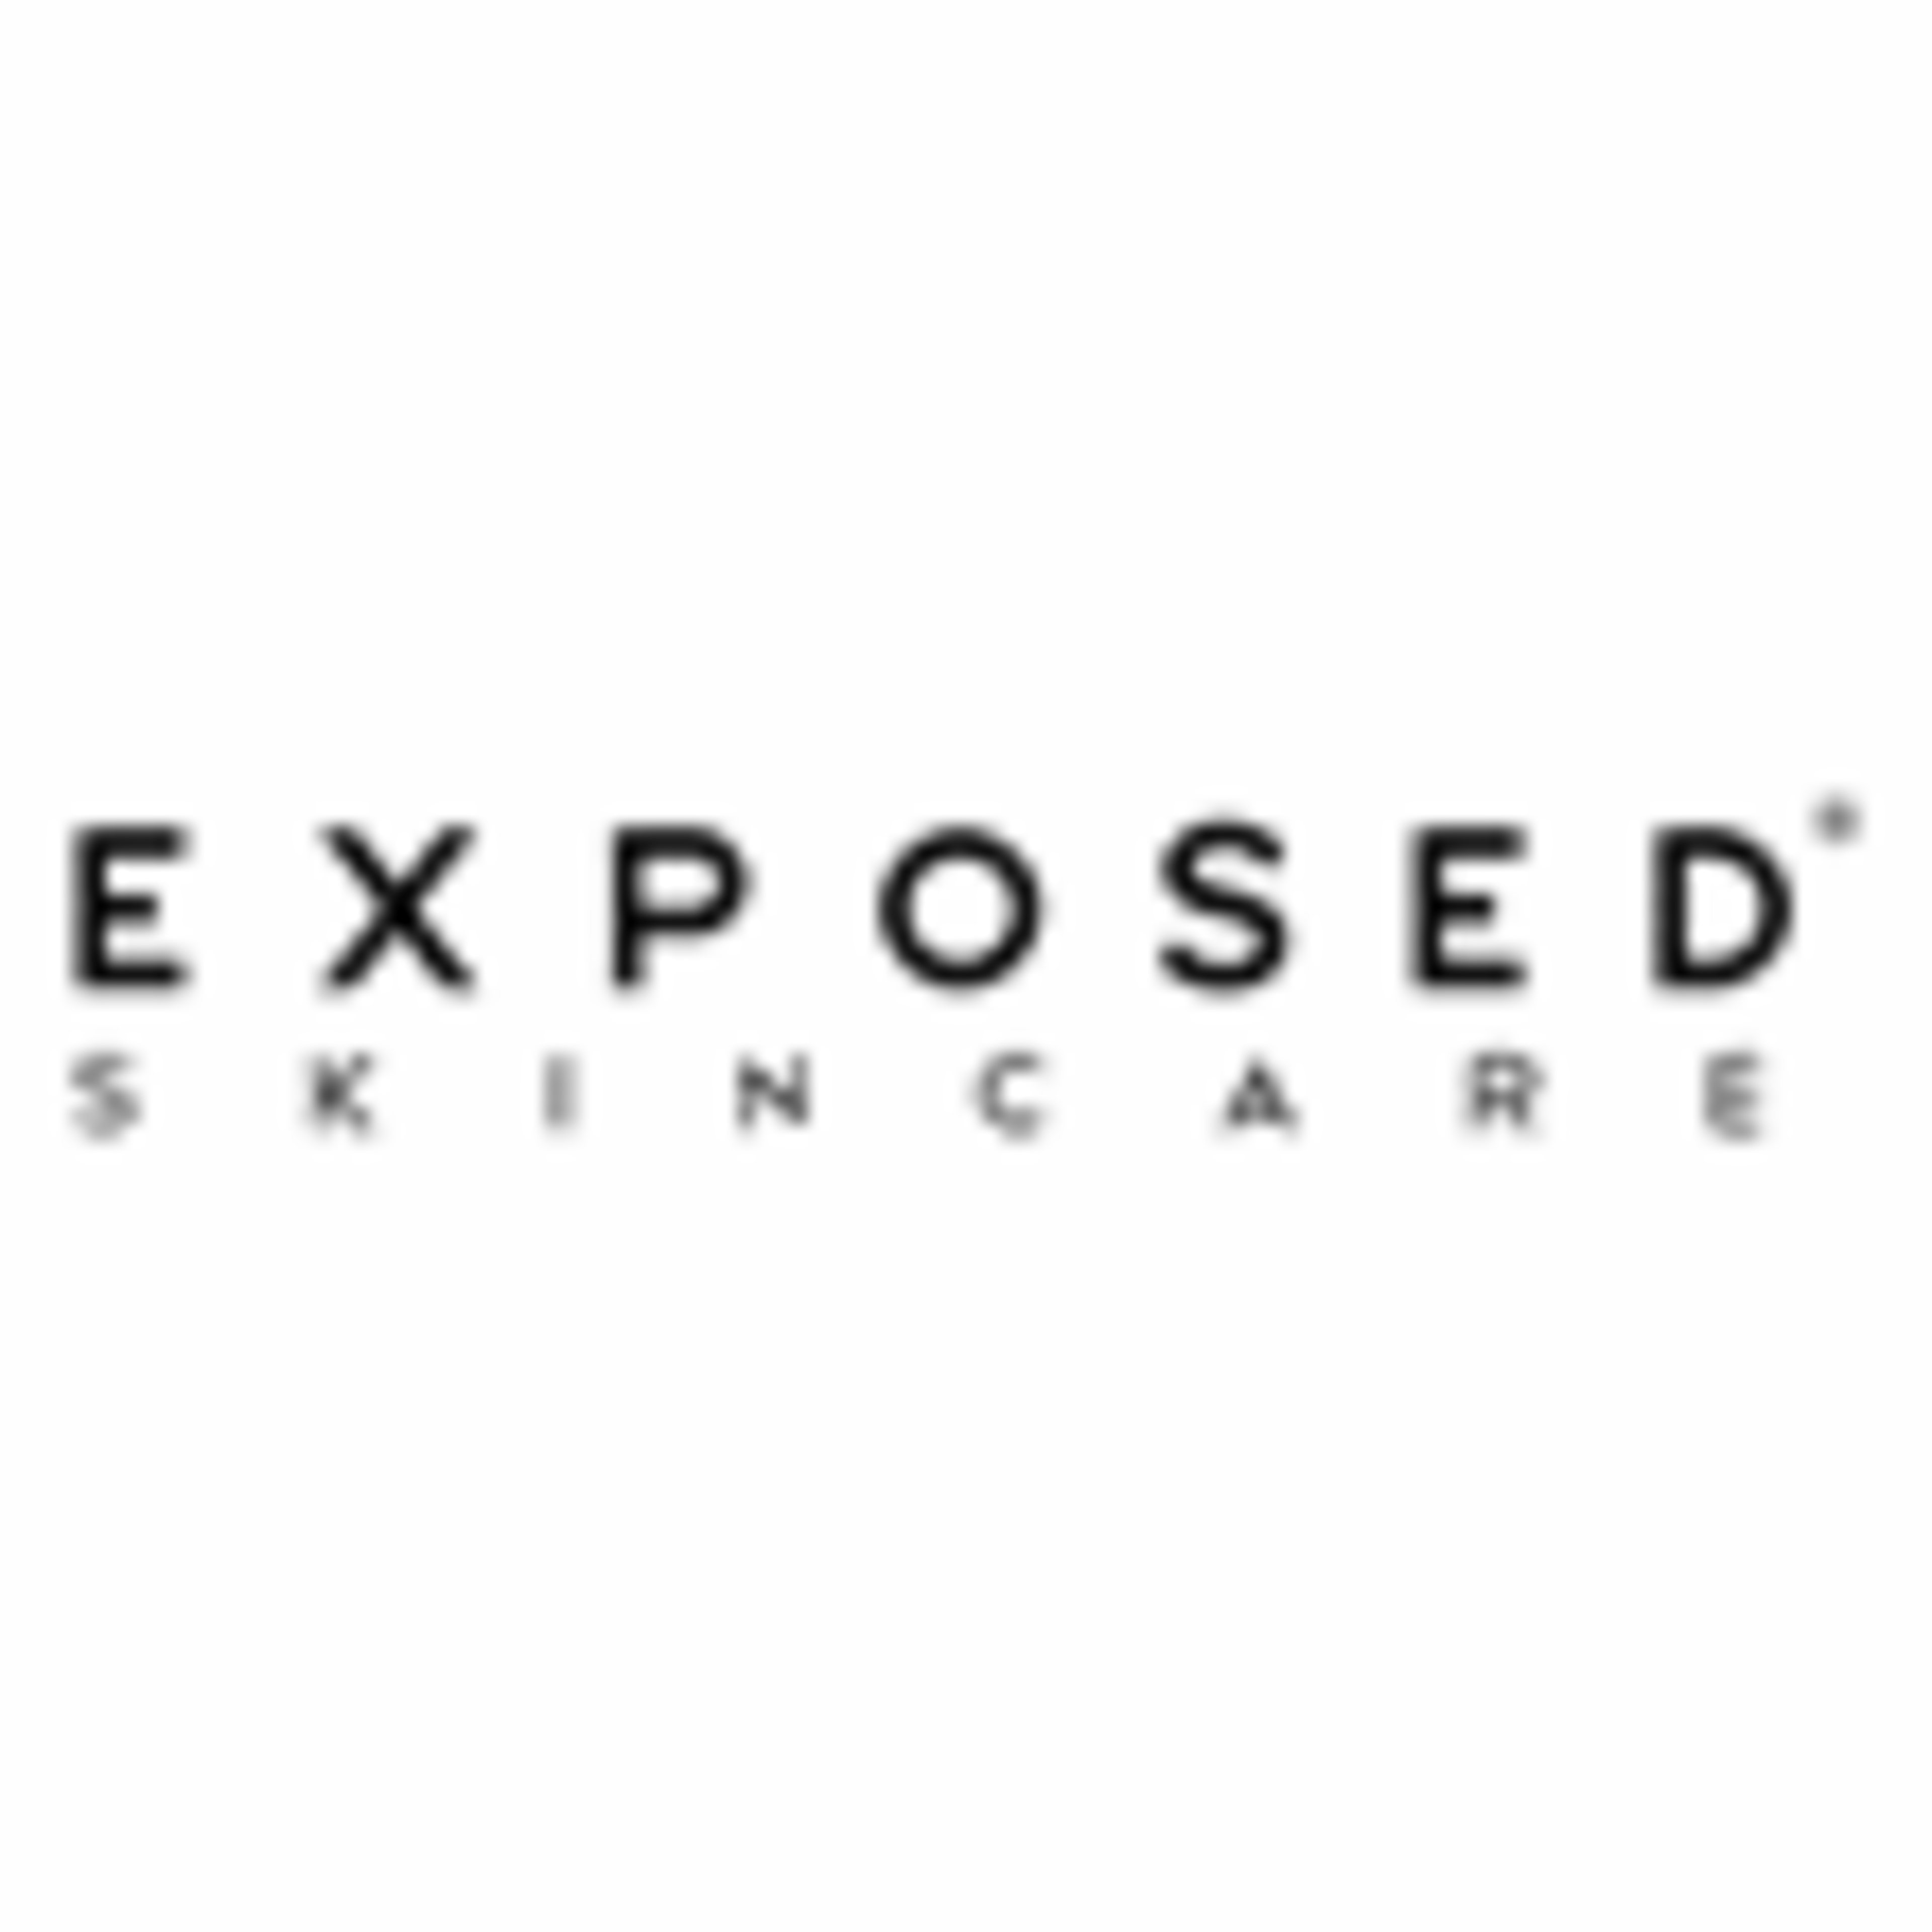 Exposed Skin Care Code